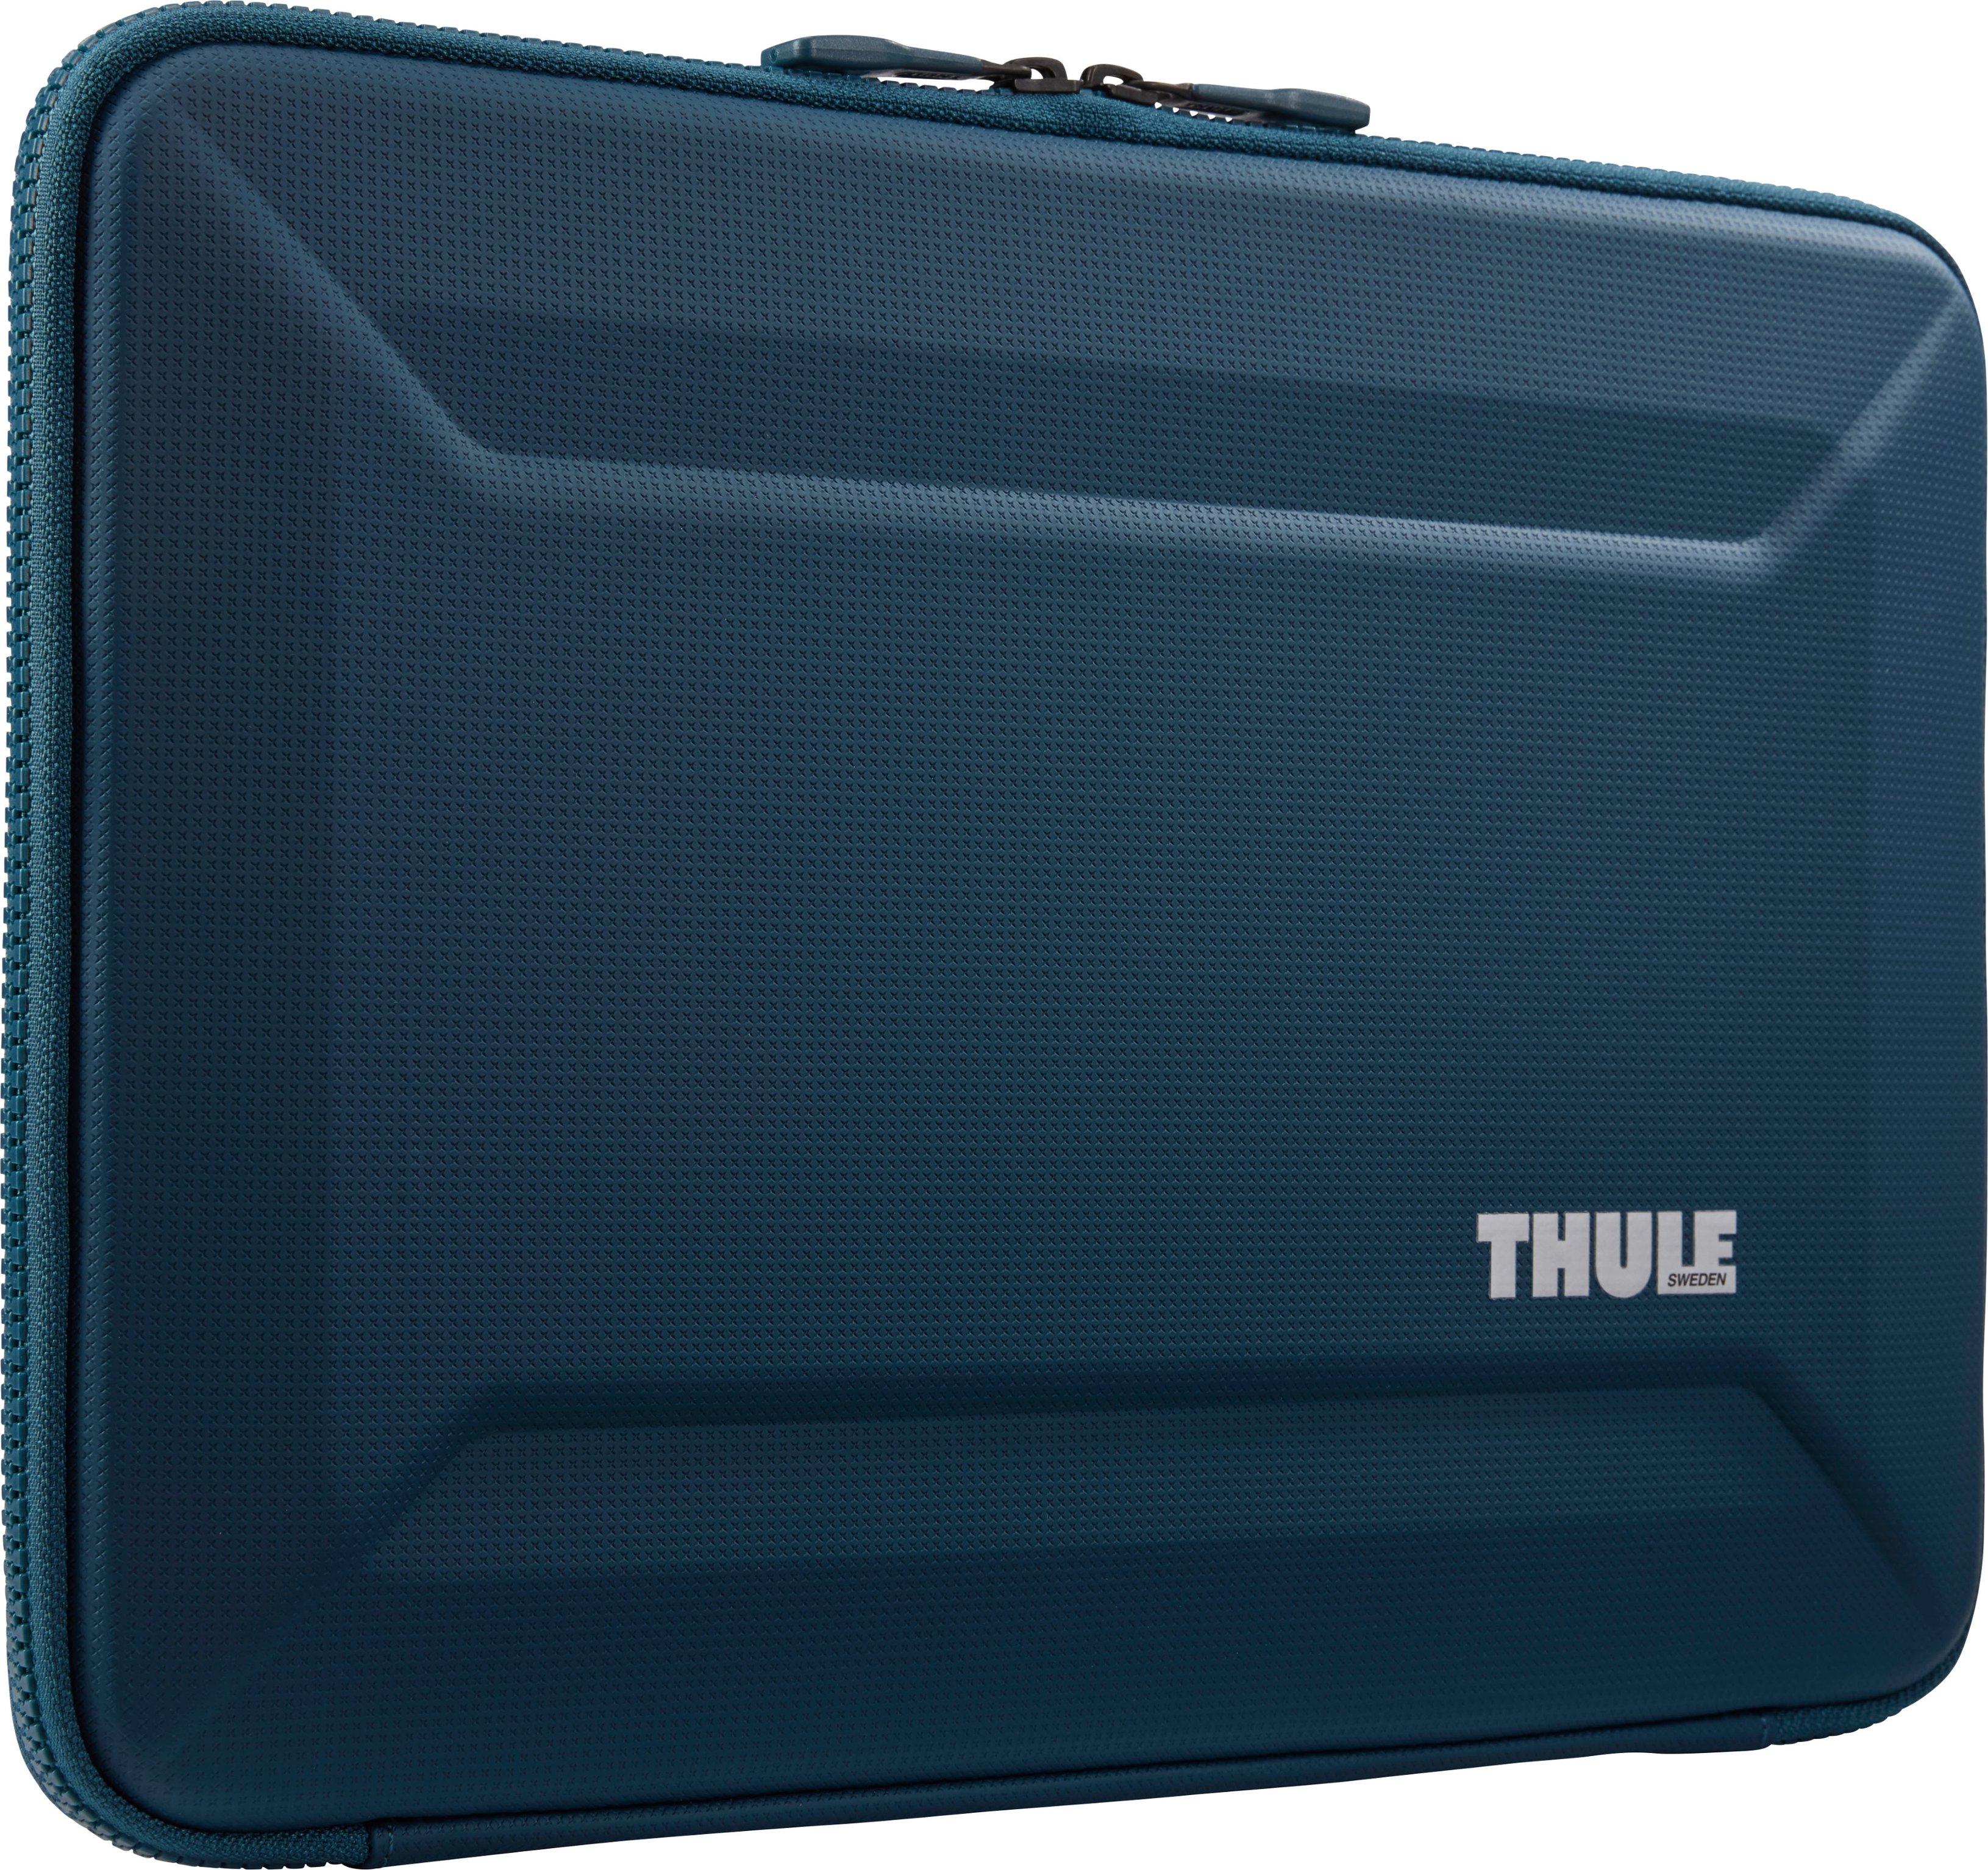 Back View: Thule - Gauntlet Laptop Sleeve Laptop Case for 16” Apple MacBook Pro, 15” Apple MacBook Pro, PCs Laptops & Chromebooks up to 14” - Blue